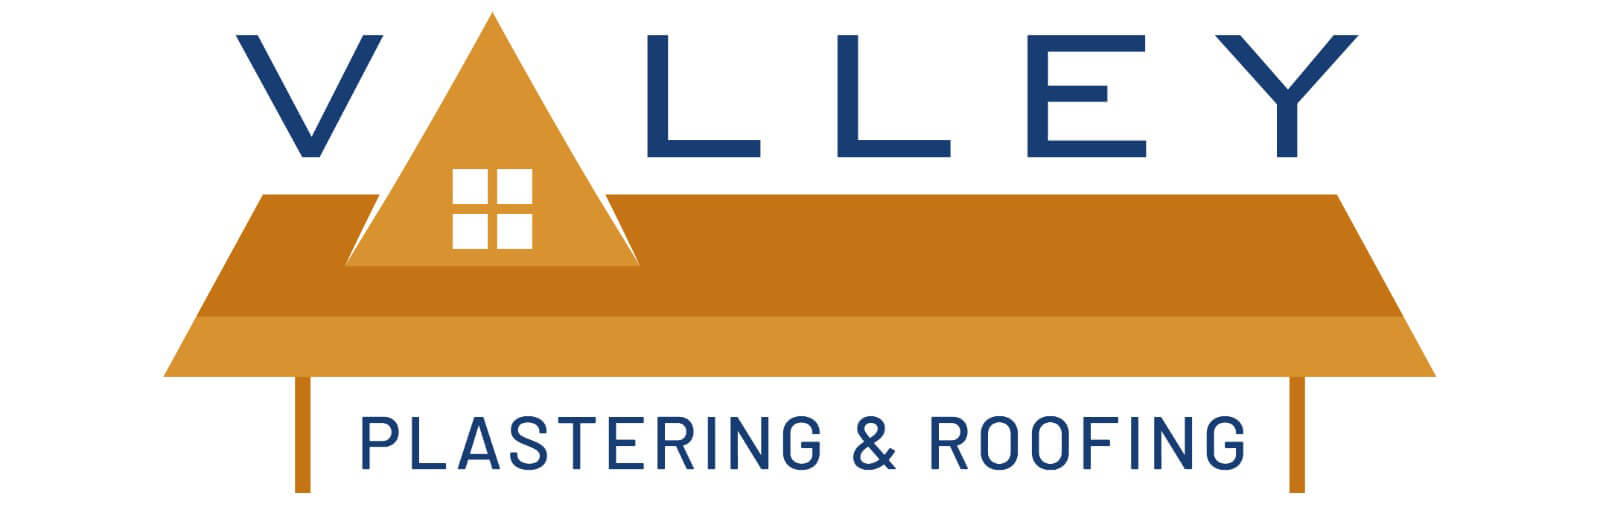 Valley Plastering & Roofing logo